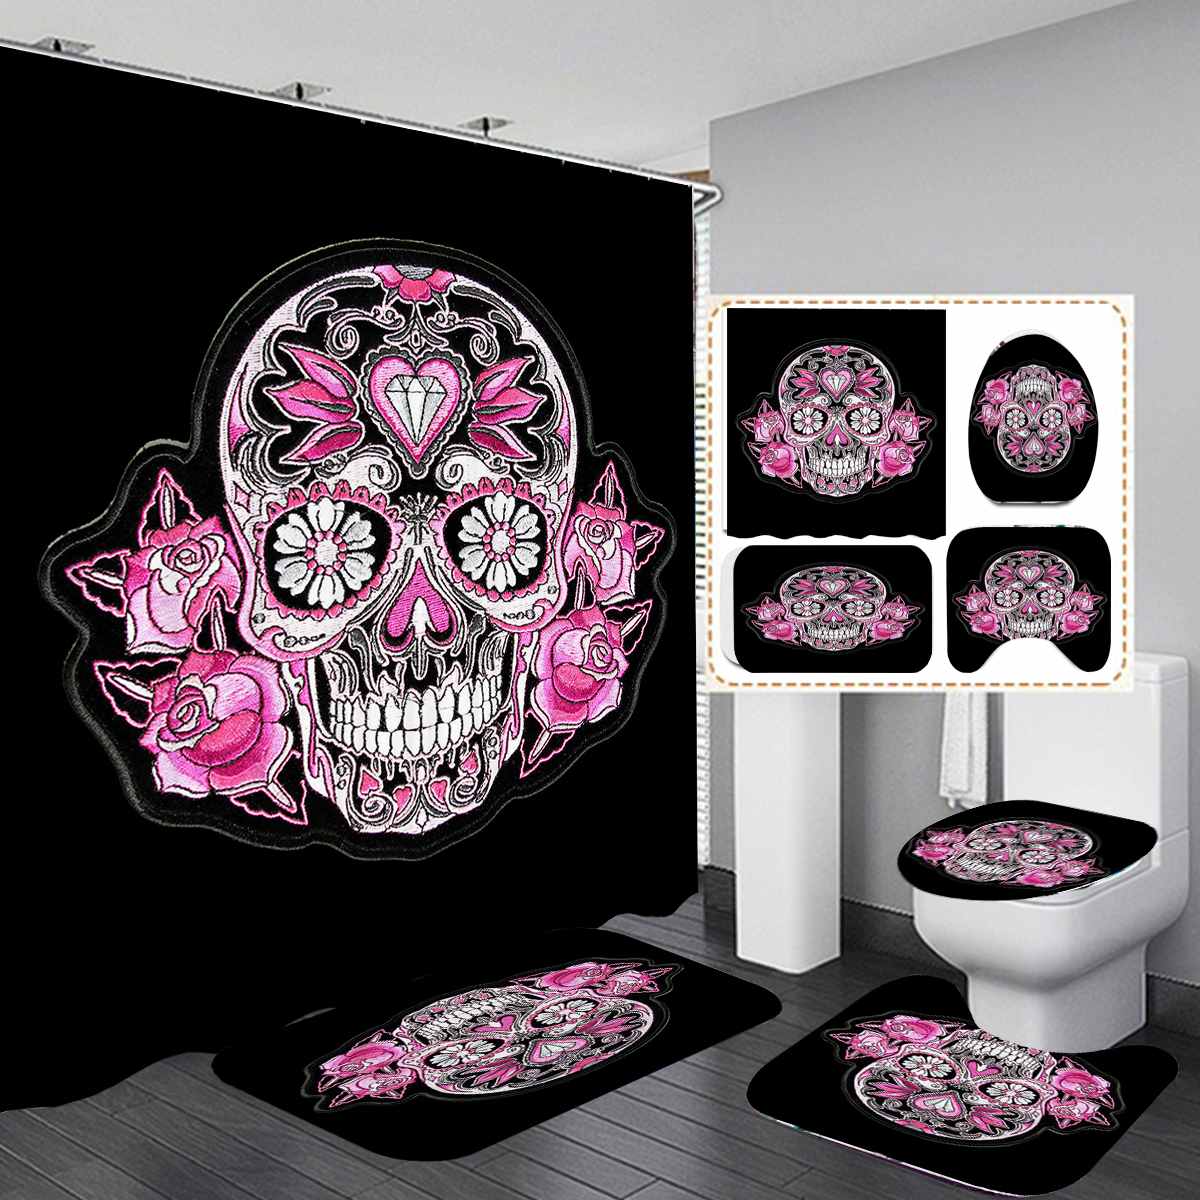 Halloween Skull bathroom curtain Waterproof Shower Curtain Set